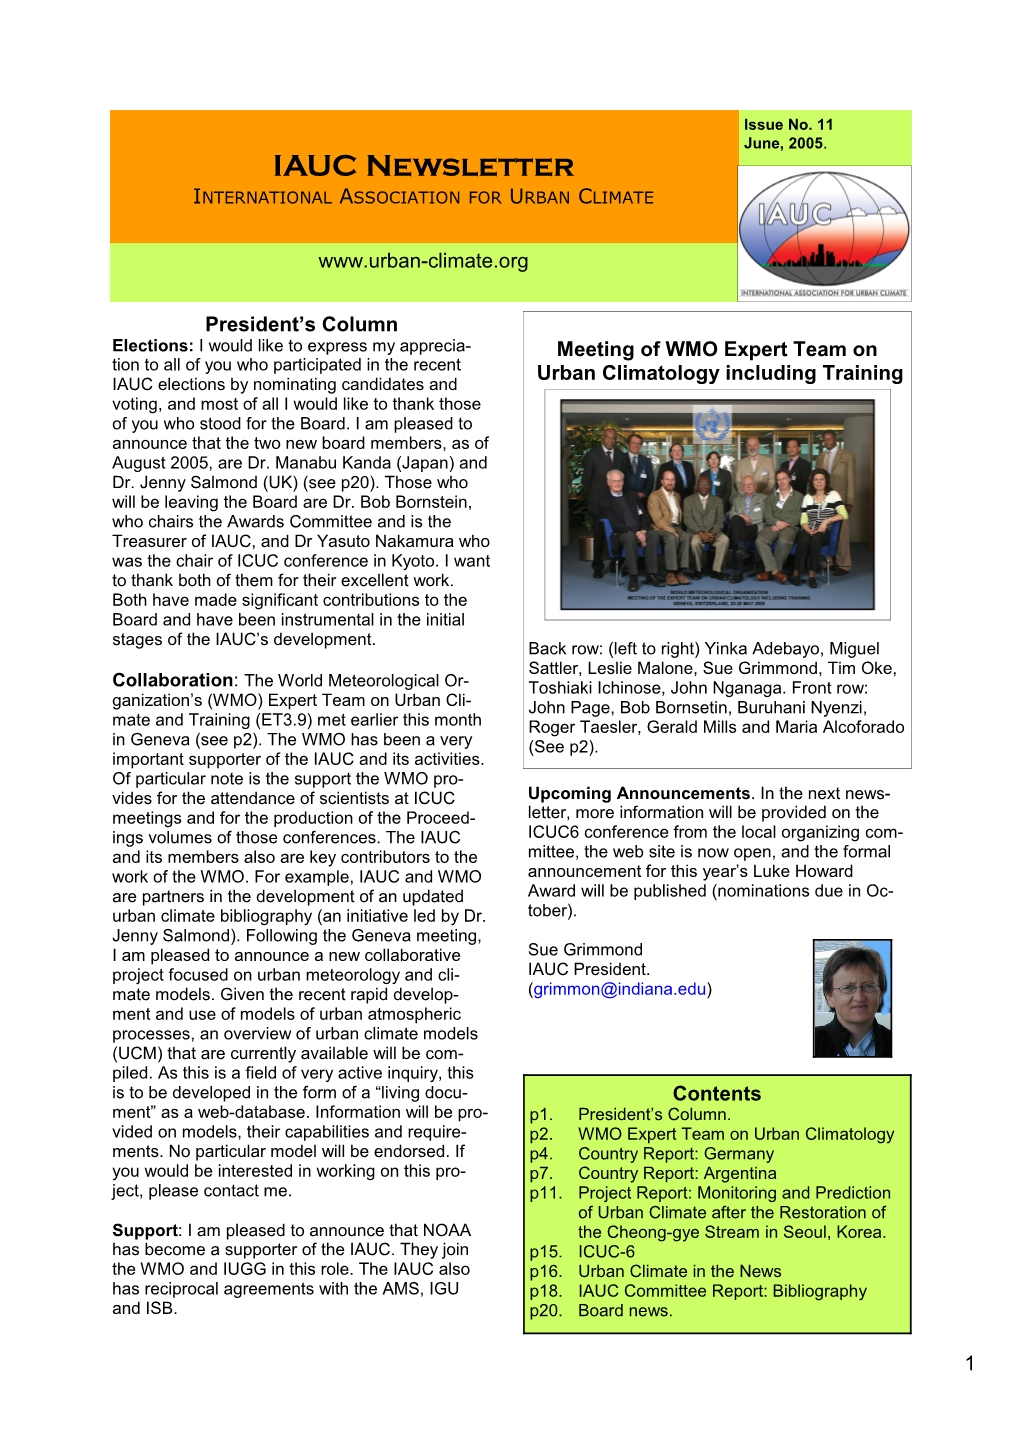 IAUC Newsletter INTERNATIONAL ASSOCIATION for URBAN CLIMATE